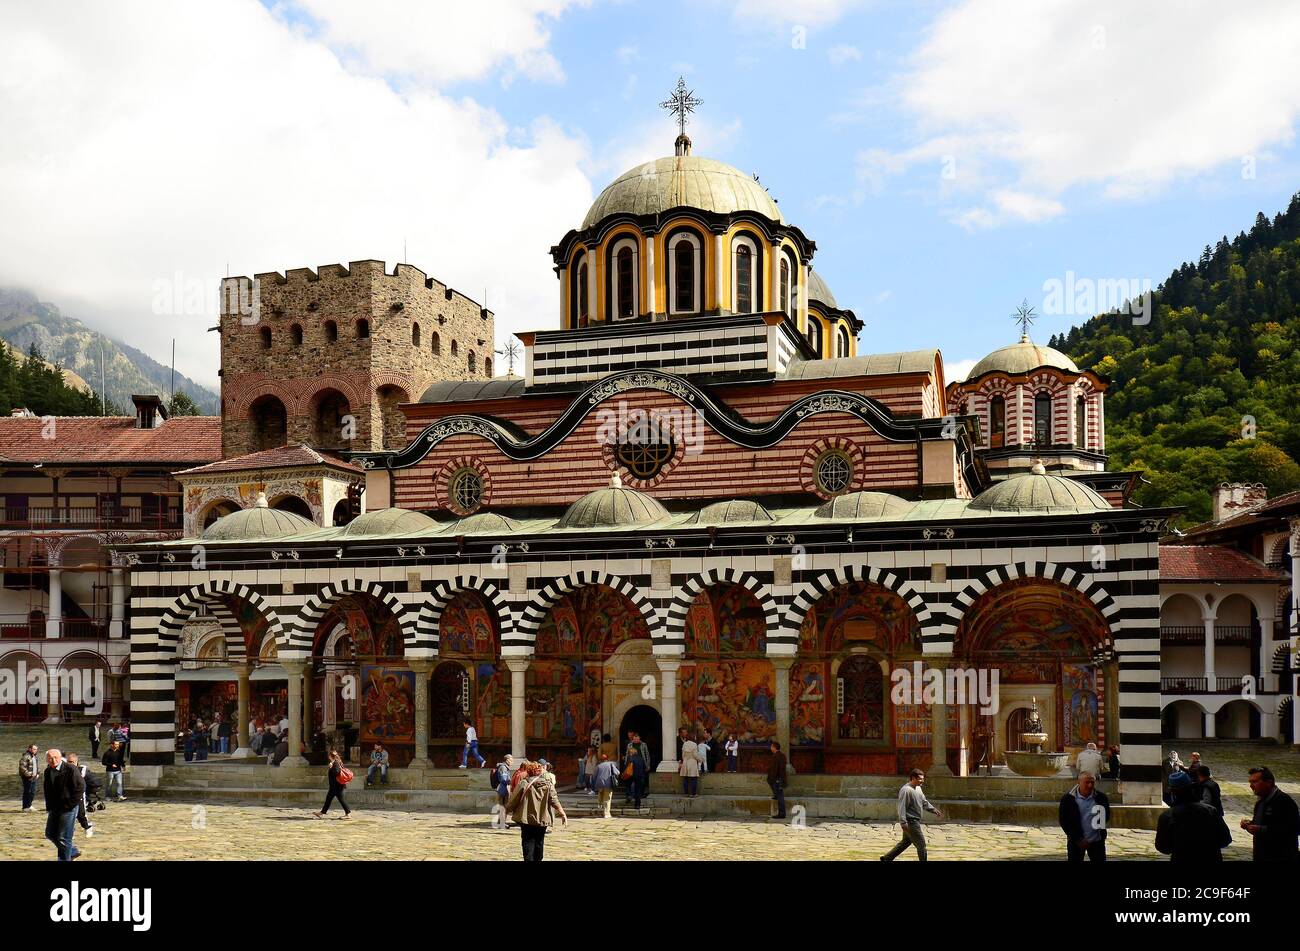 Rila, Bulgaria - September 29, 2013: Unidentified tourists visit the Unesco World Heritage site Monastery of Saint Ivan of Rila - named Rila monastery Stock Photo